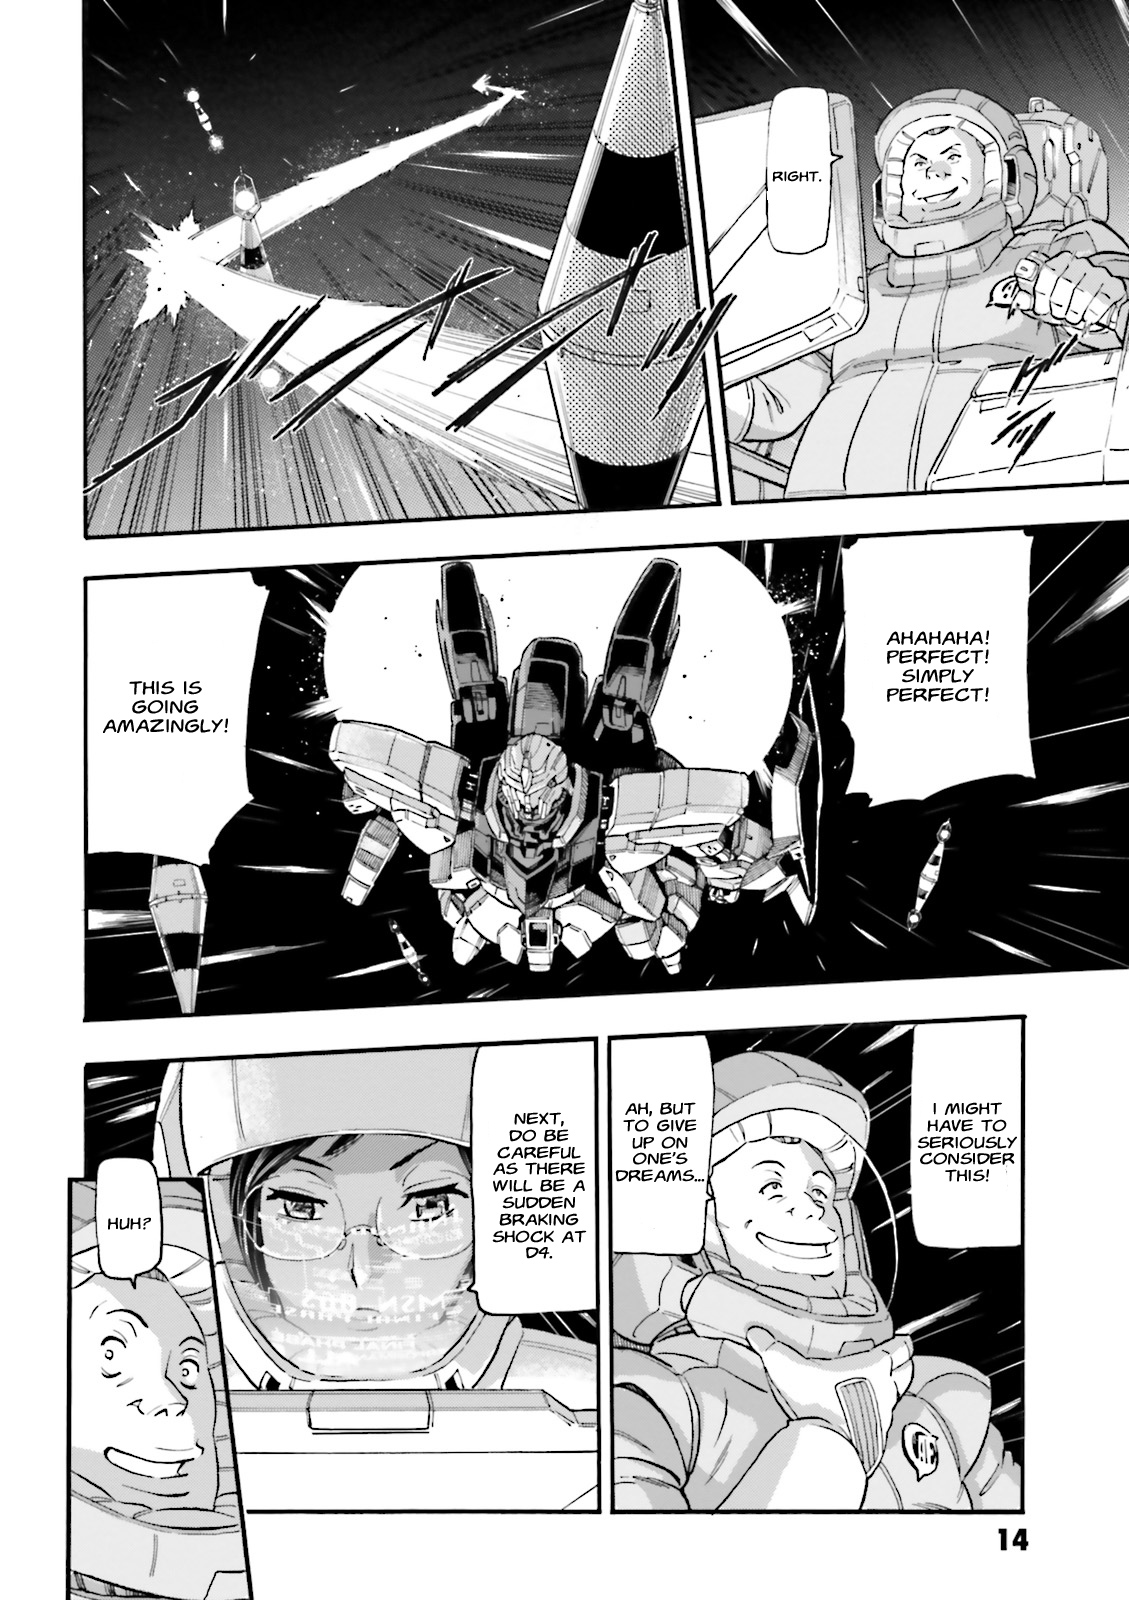 Kidou Senshi Gundam UC (Unicorn) Bande Dessinée: Episode 0 Vol. 1 Ch. 1 Alberto Vist <Activation Test>